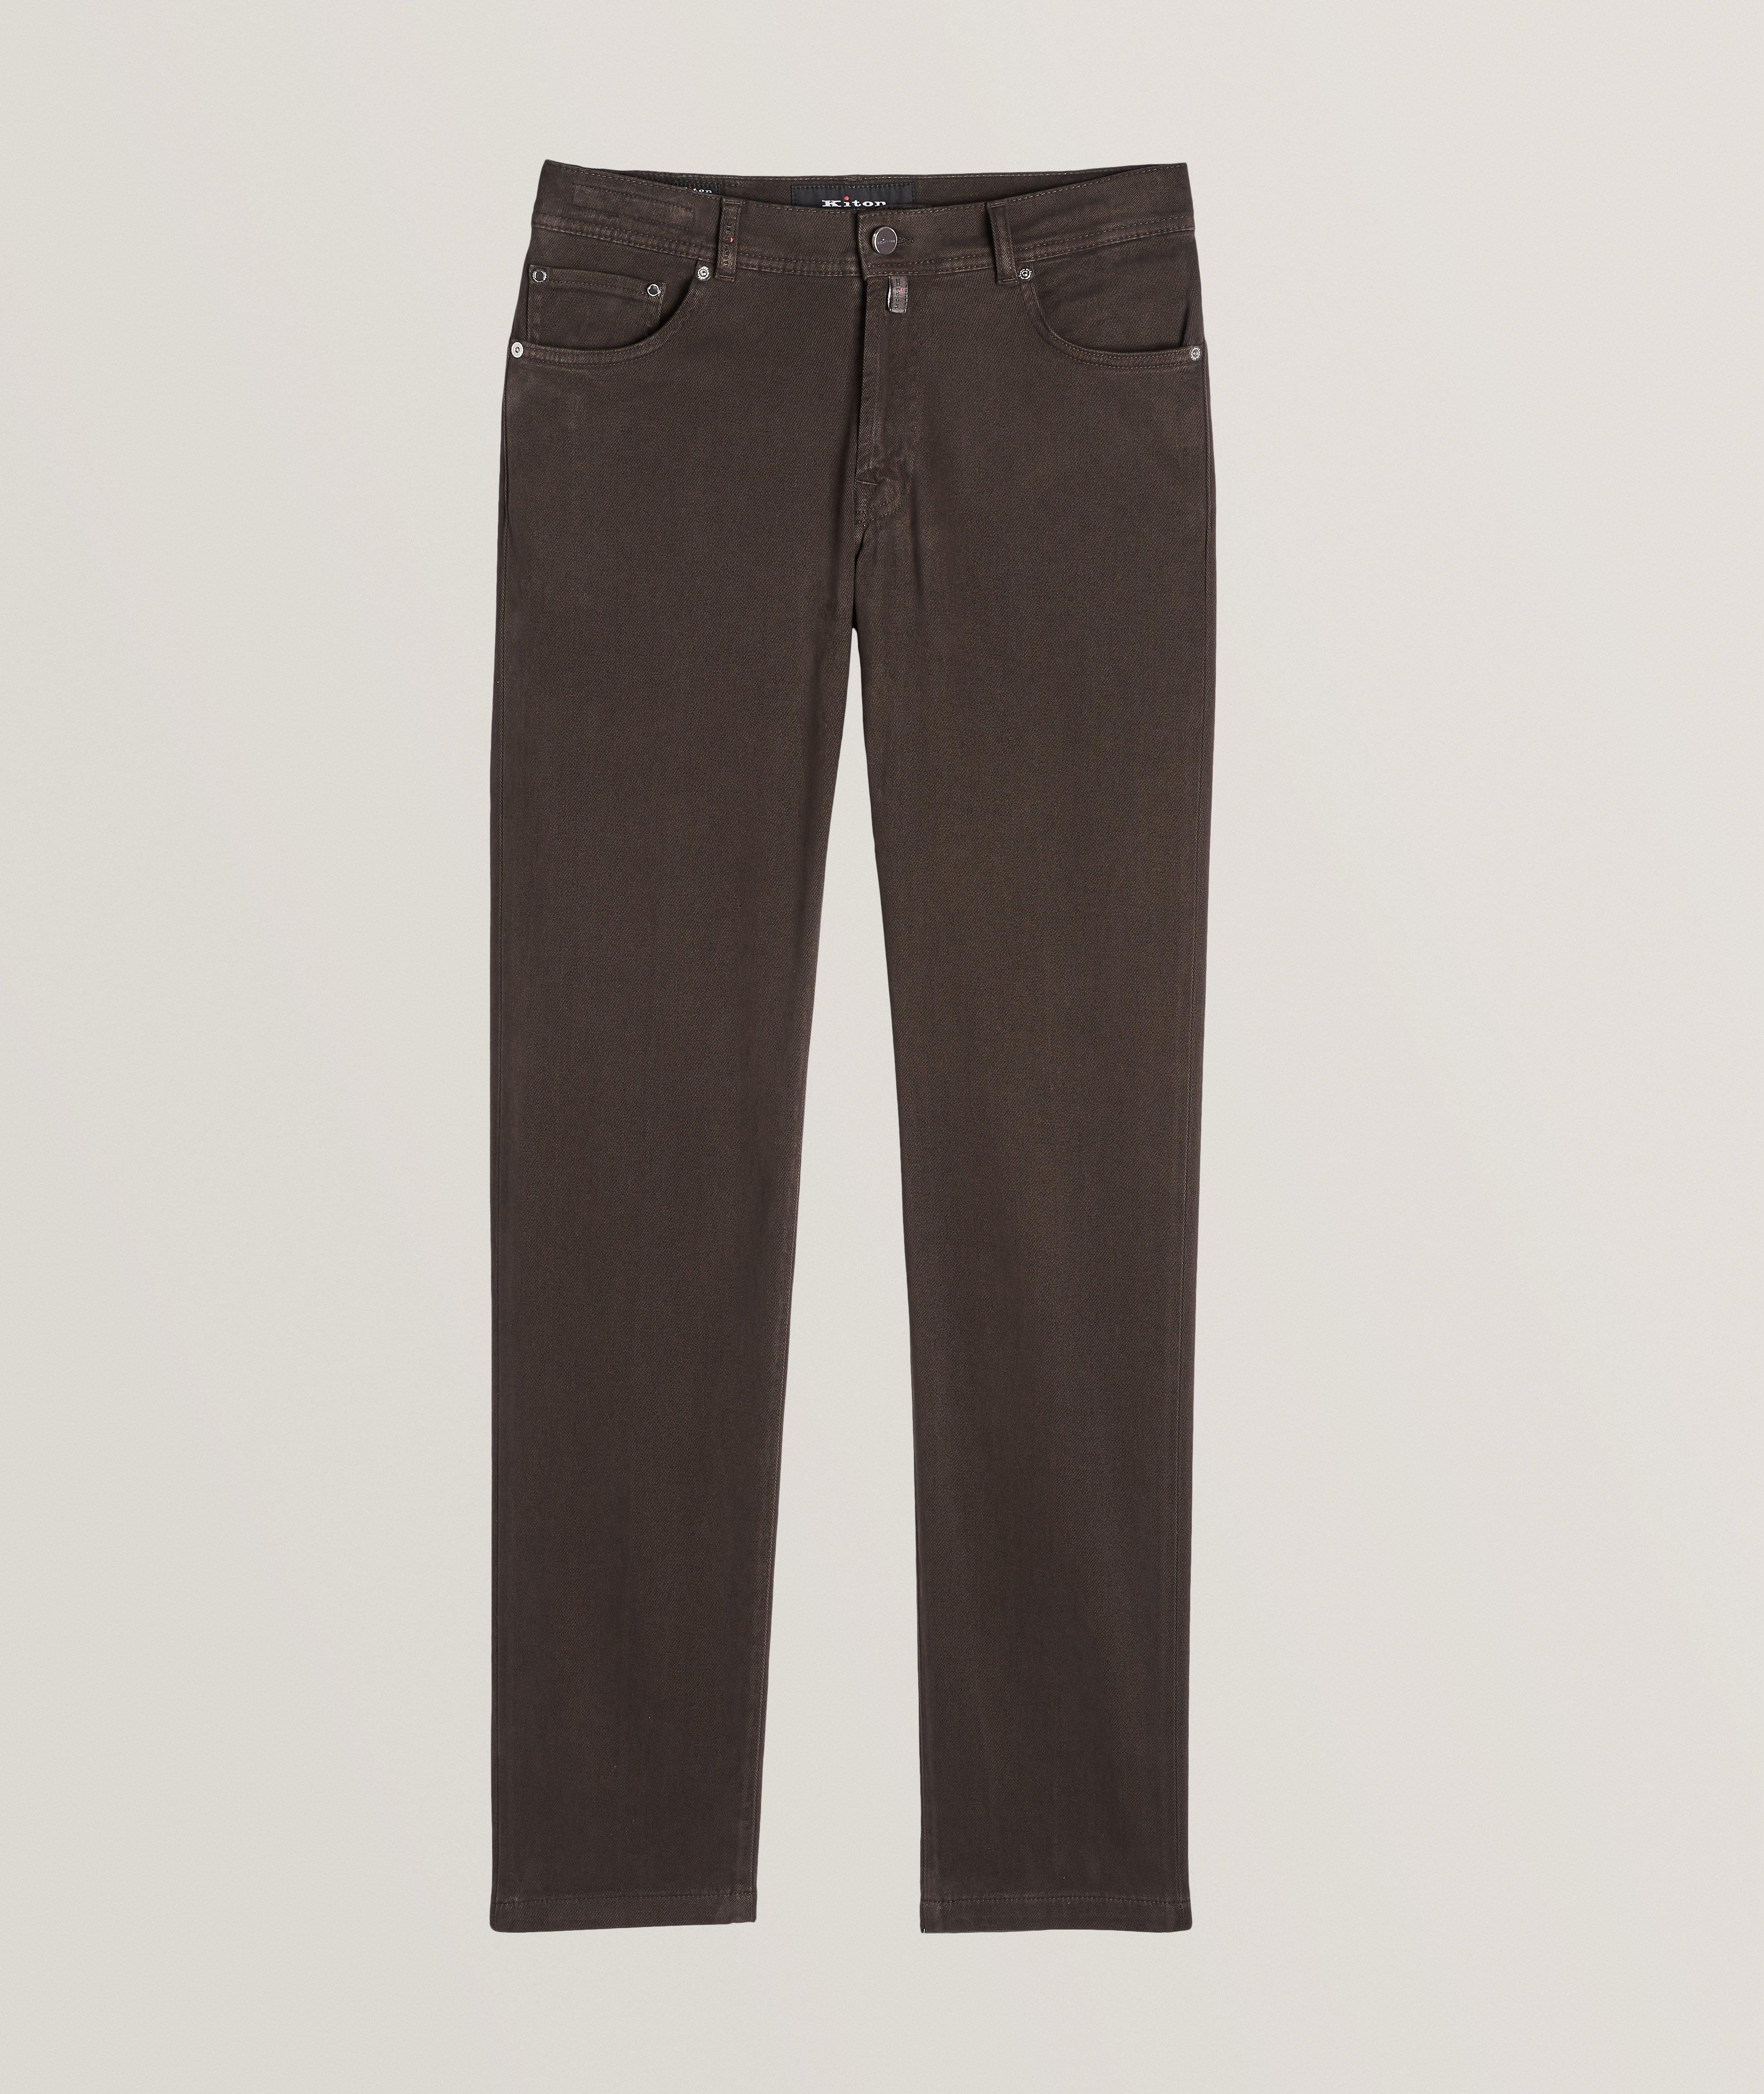 Slim Fit Five-Pocket Cotton-Stretch Pants image 0